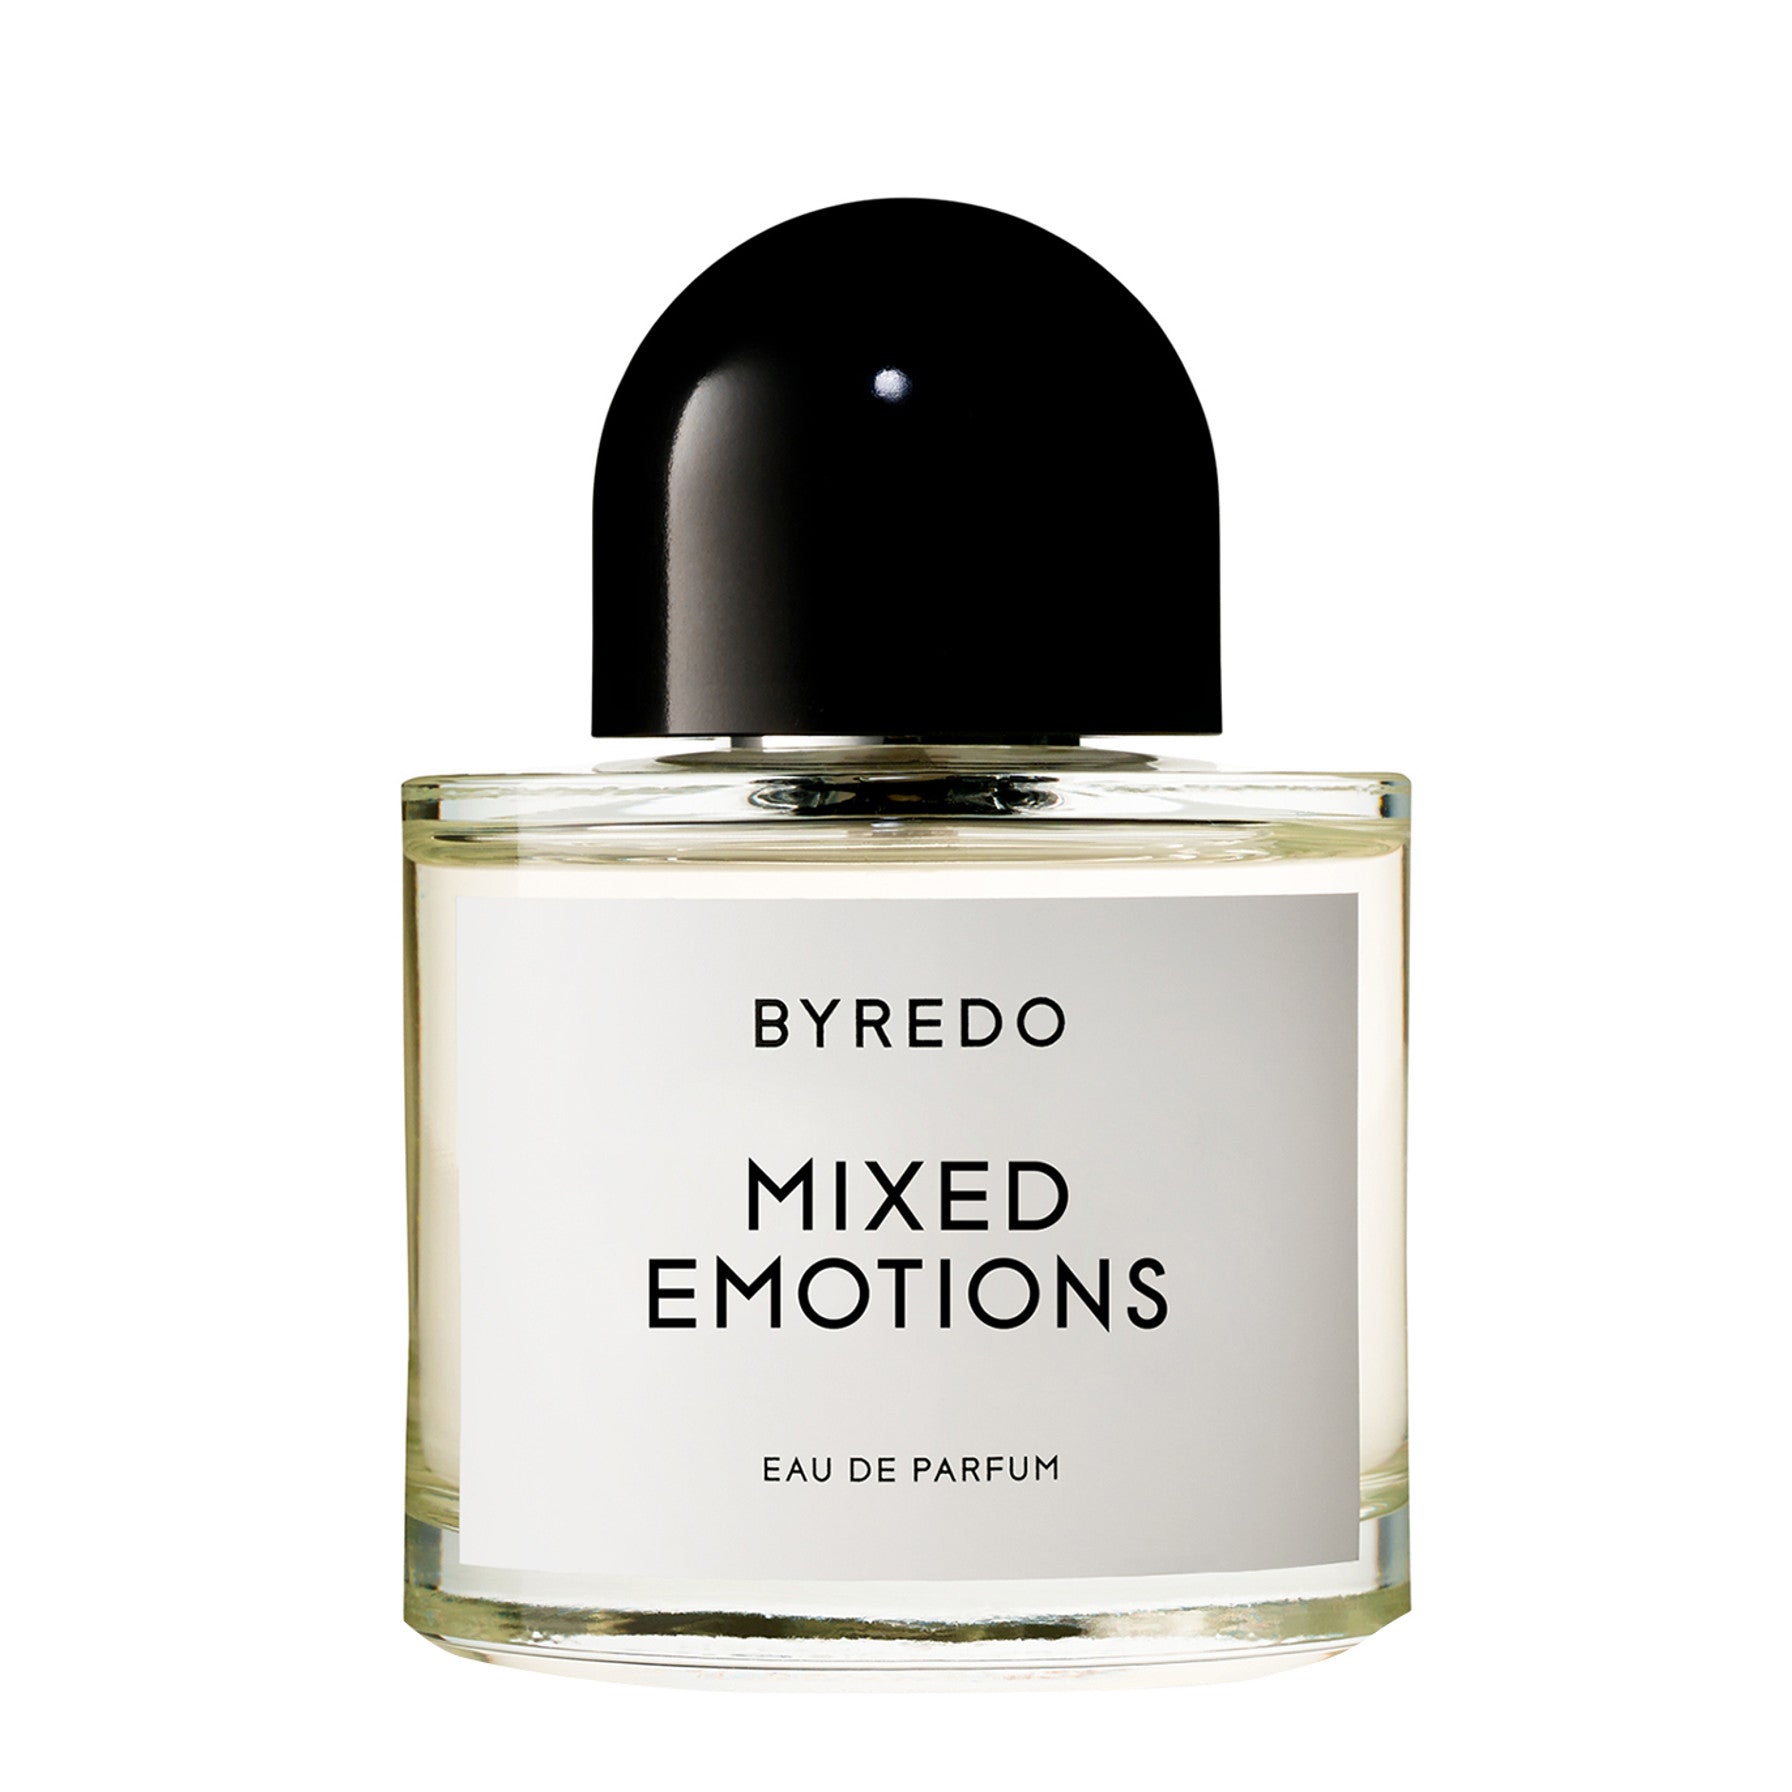 Byredo - “Mixed Emotions” Eau de Parfum 100ml view 1